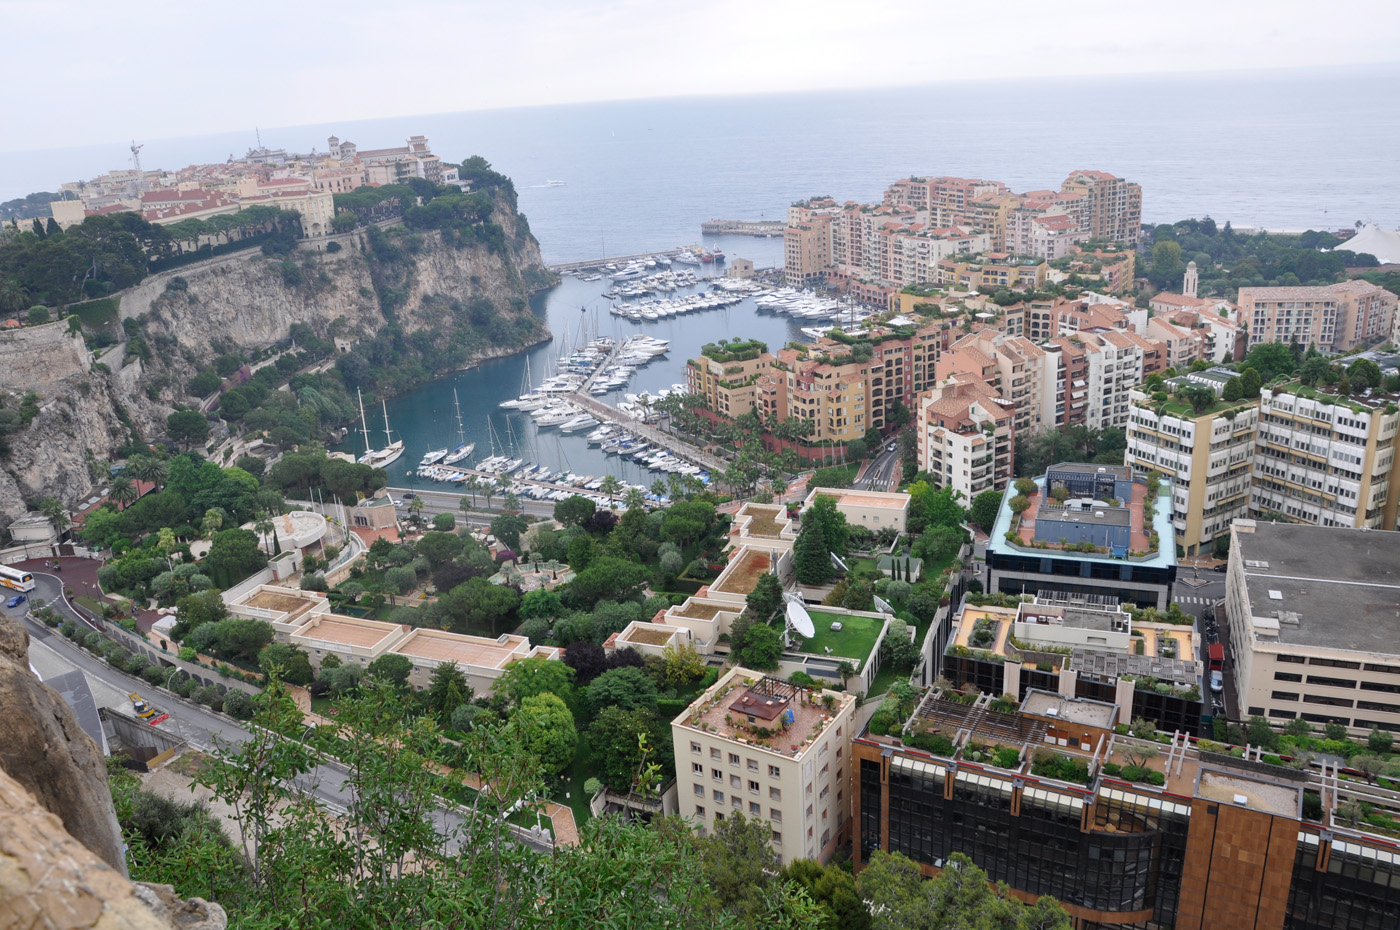 Monaco Exotic Garden and Cave “l’Observatoire”